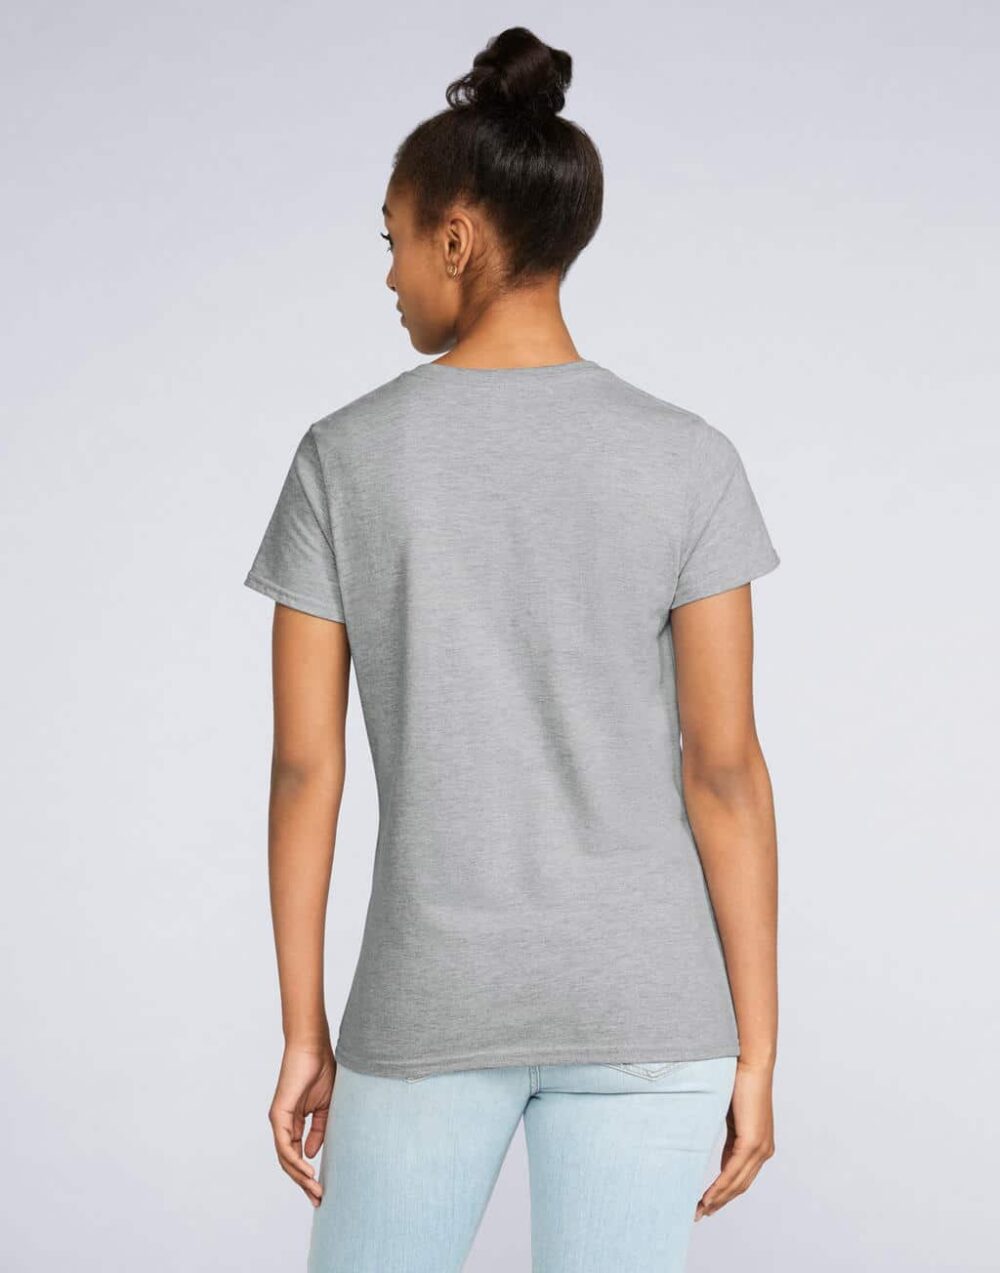 Premium Cotton Ladies V-Neck T-Shirt